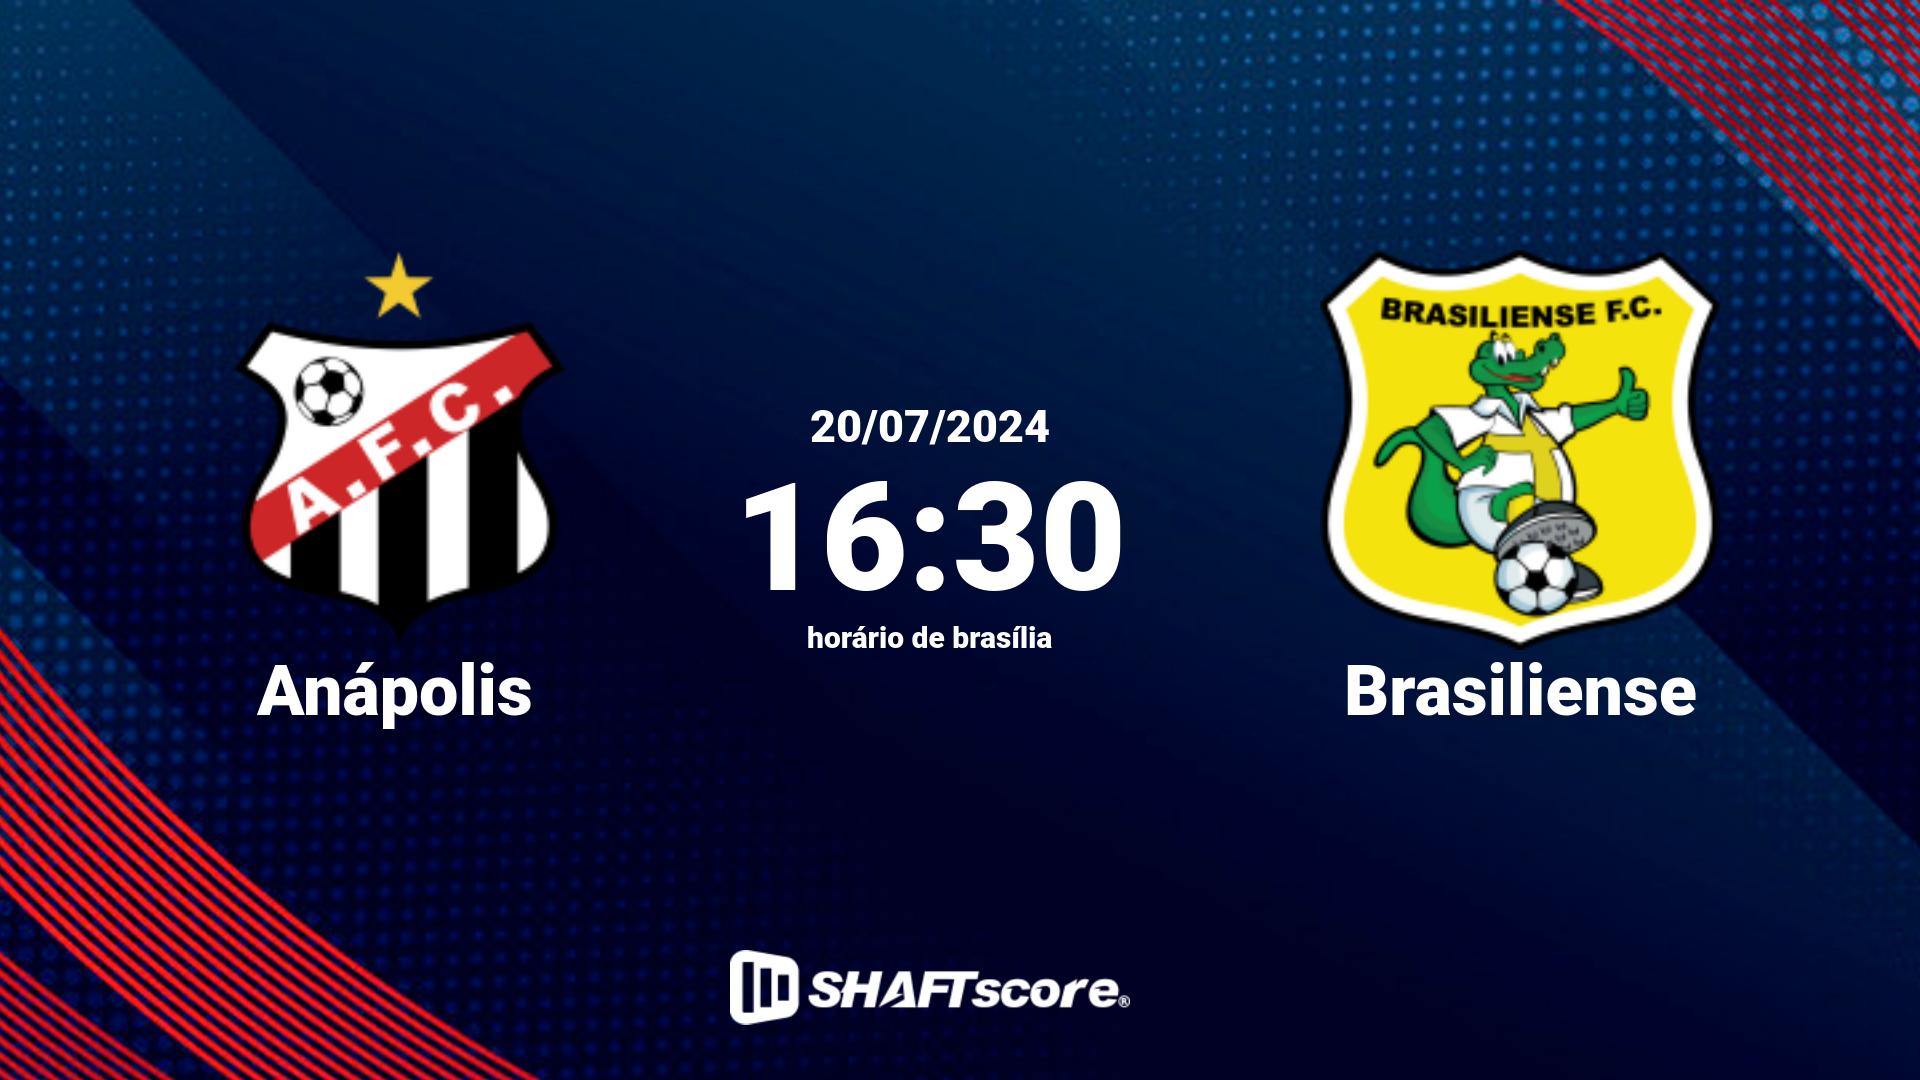 Estatísticas do jogo Anápolis vs Brasiliense 20.07 16:30